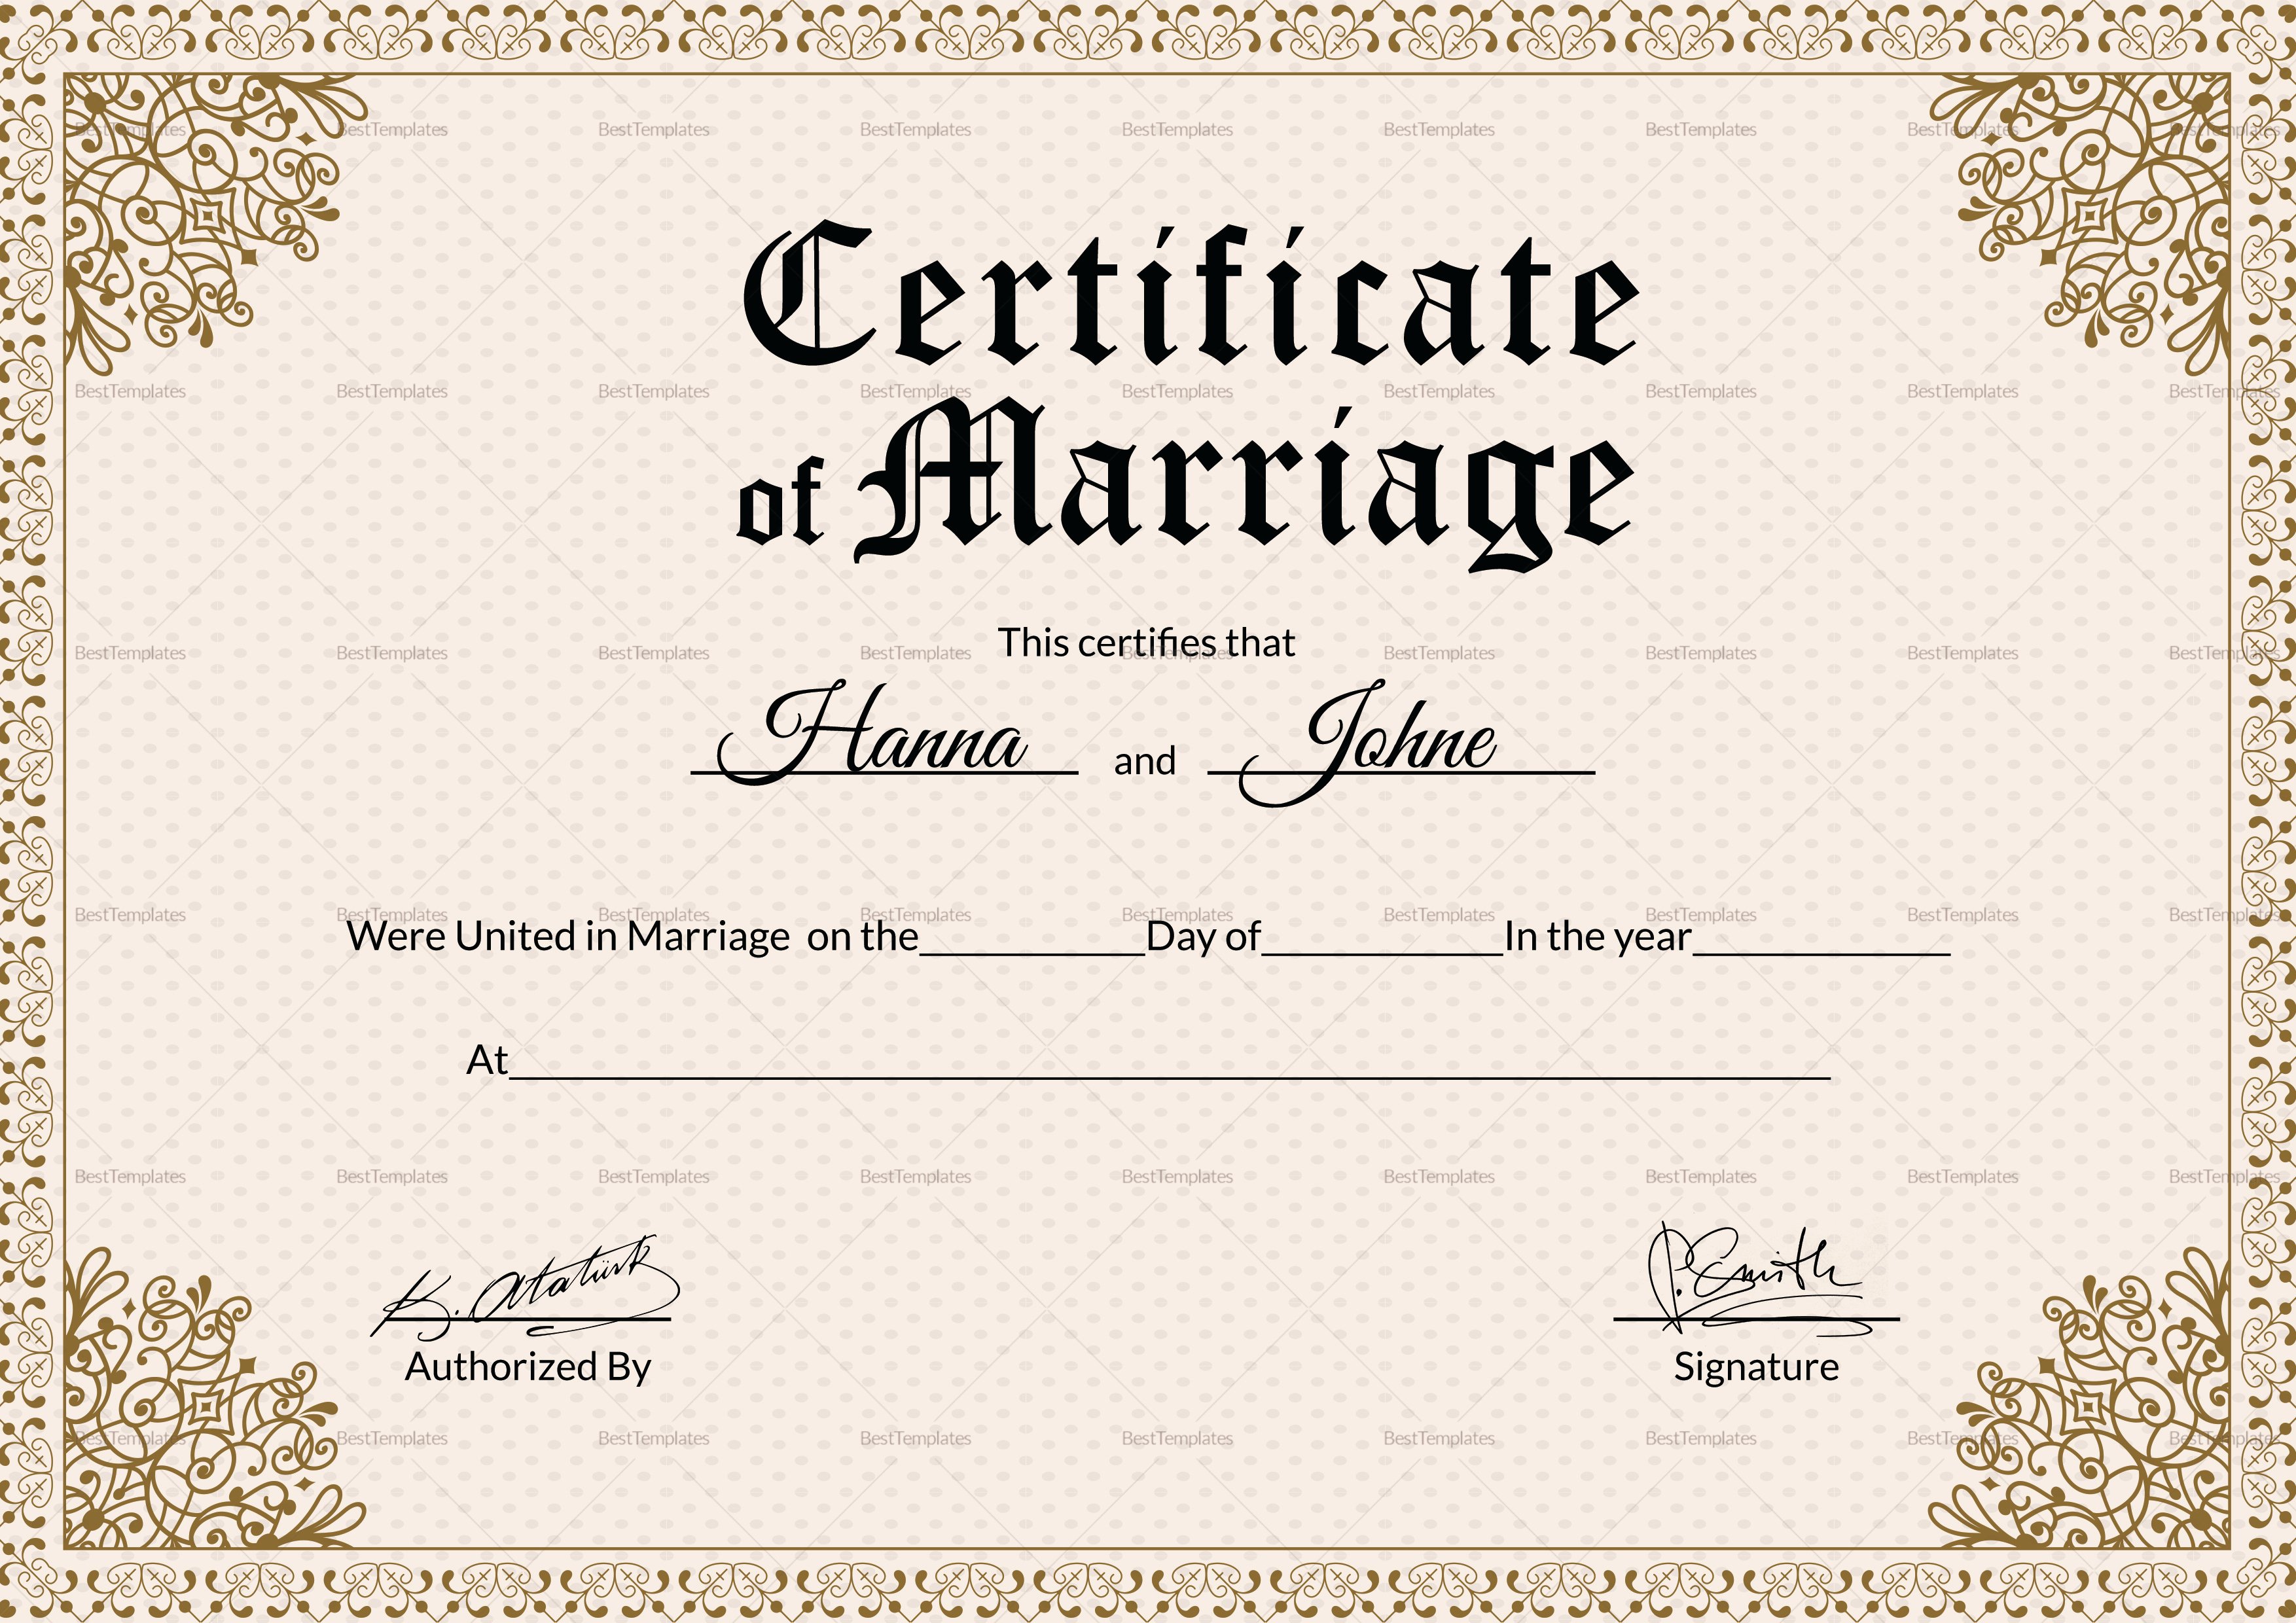 Marriage Certificate Template Word Best Of Keepsake Marriage Certificate Design Template In Psd Word